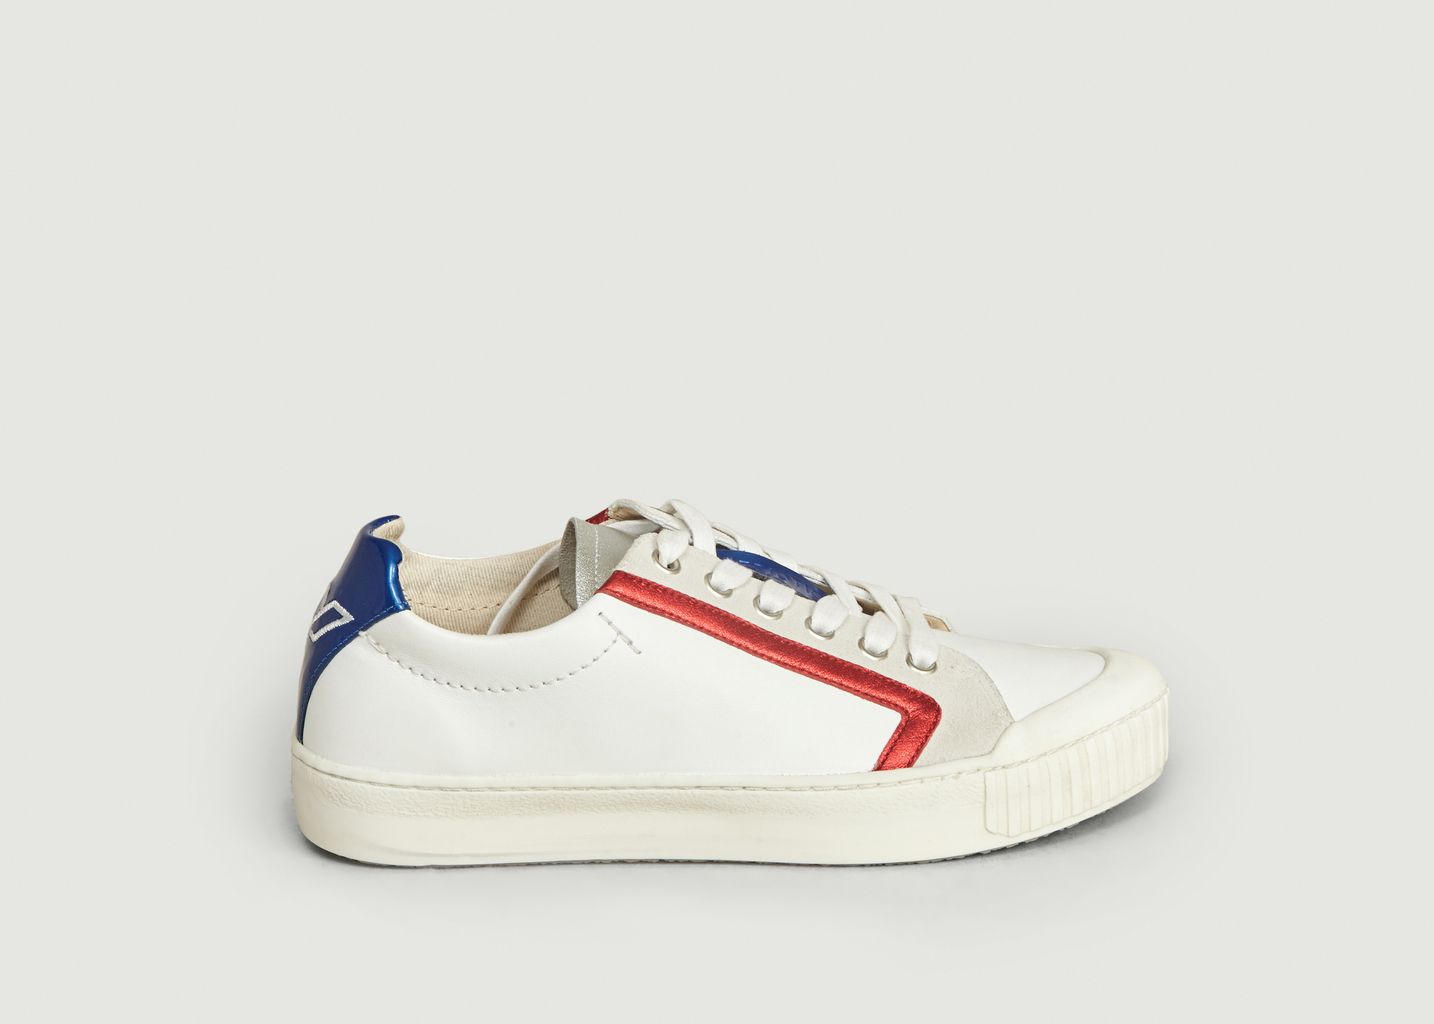 X-Delta Run Sneakers - Patriotic